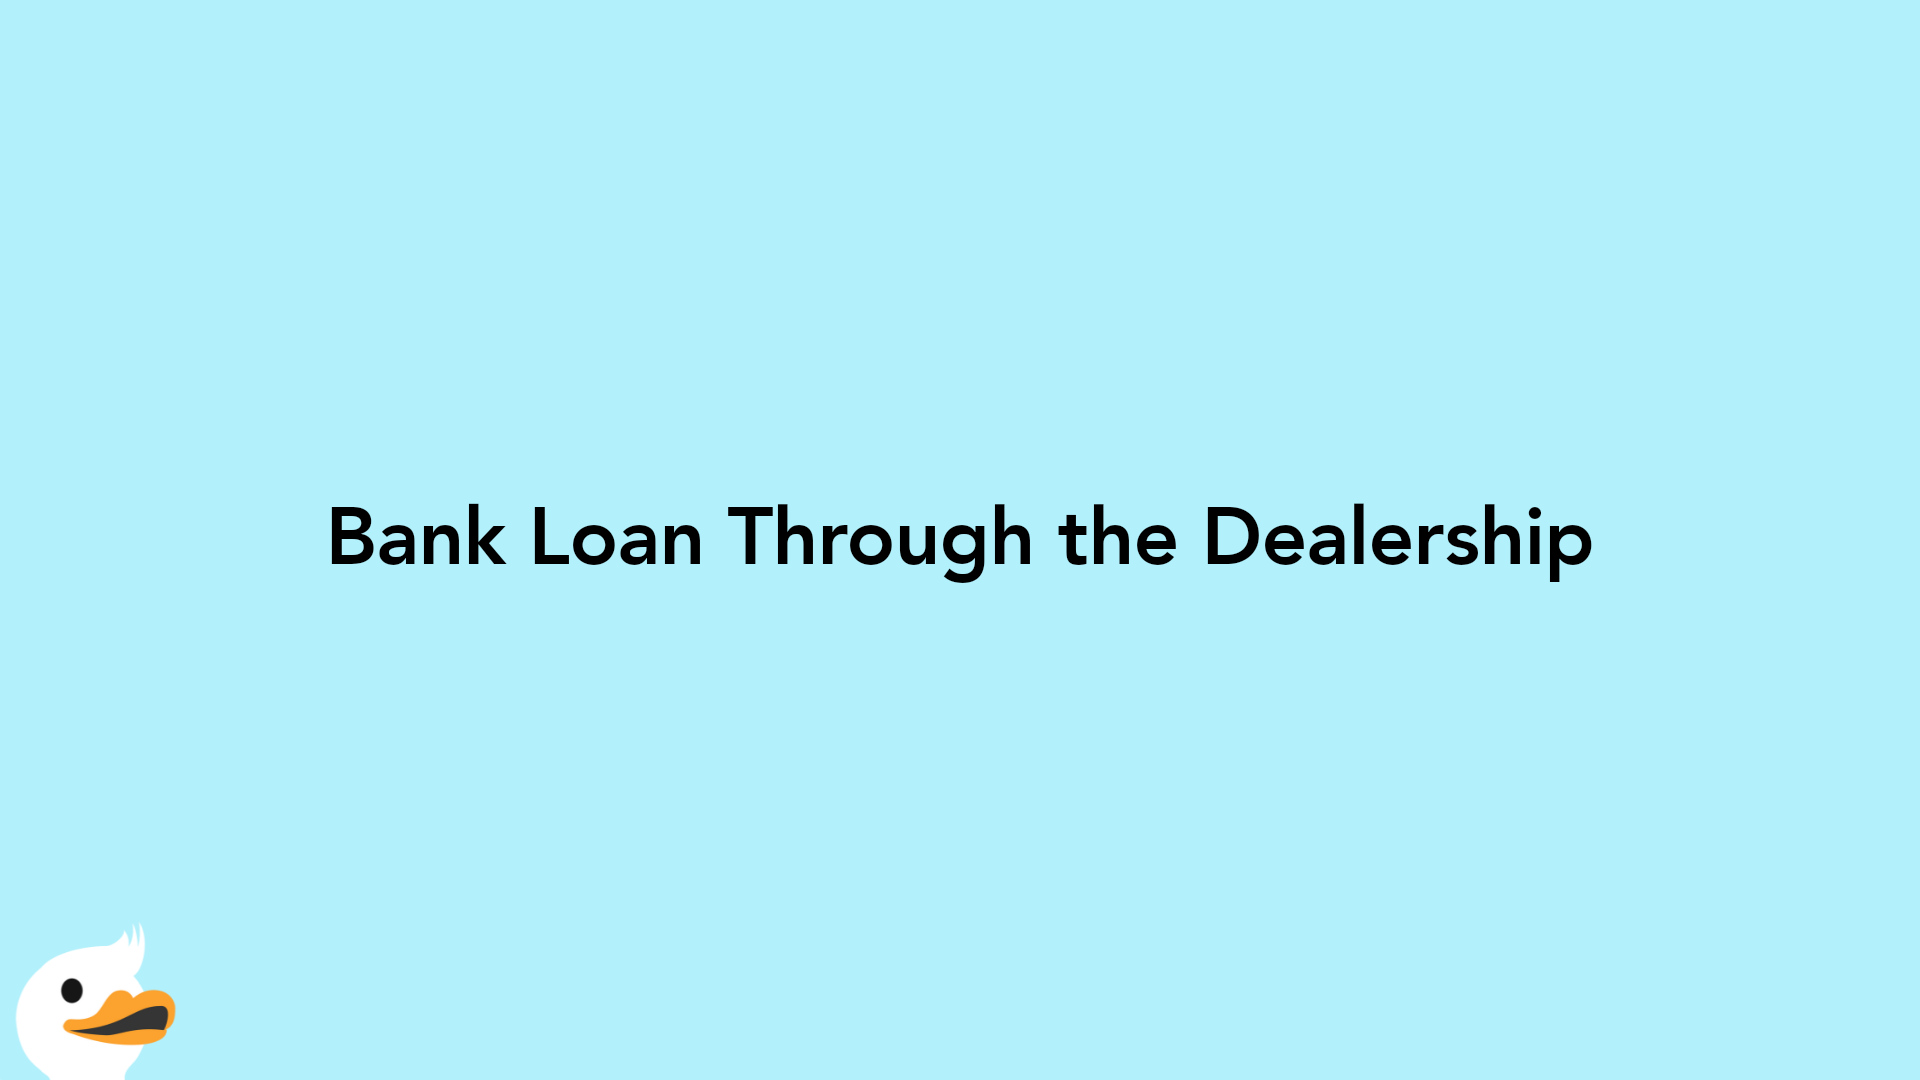 Bank Loan Through the Dealership